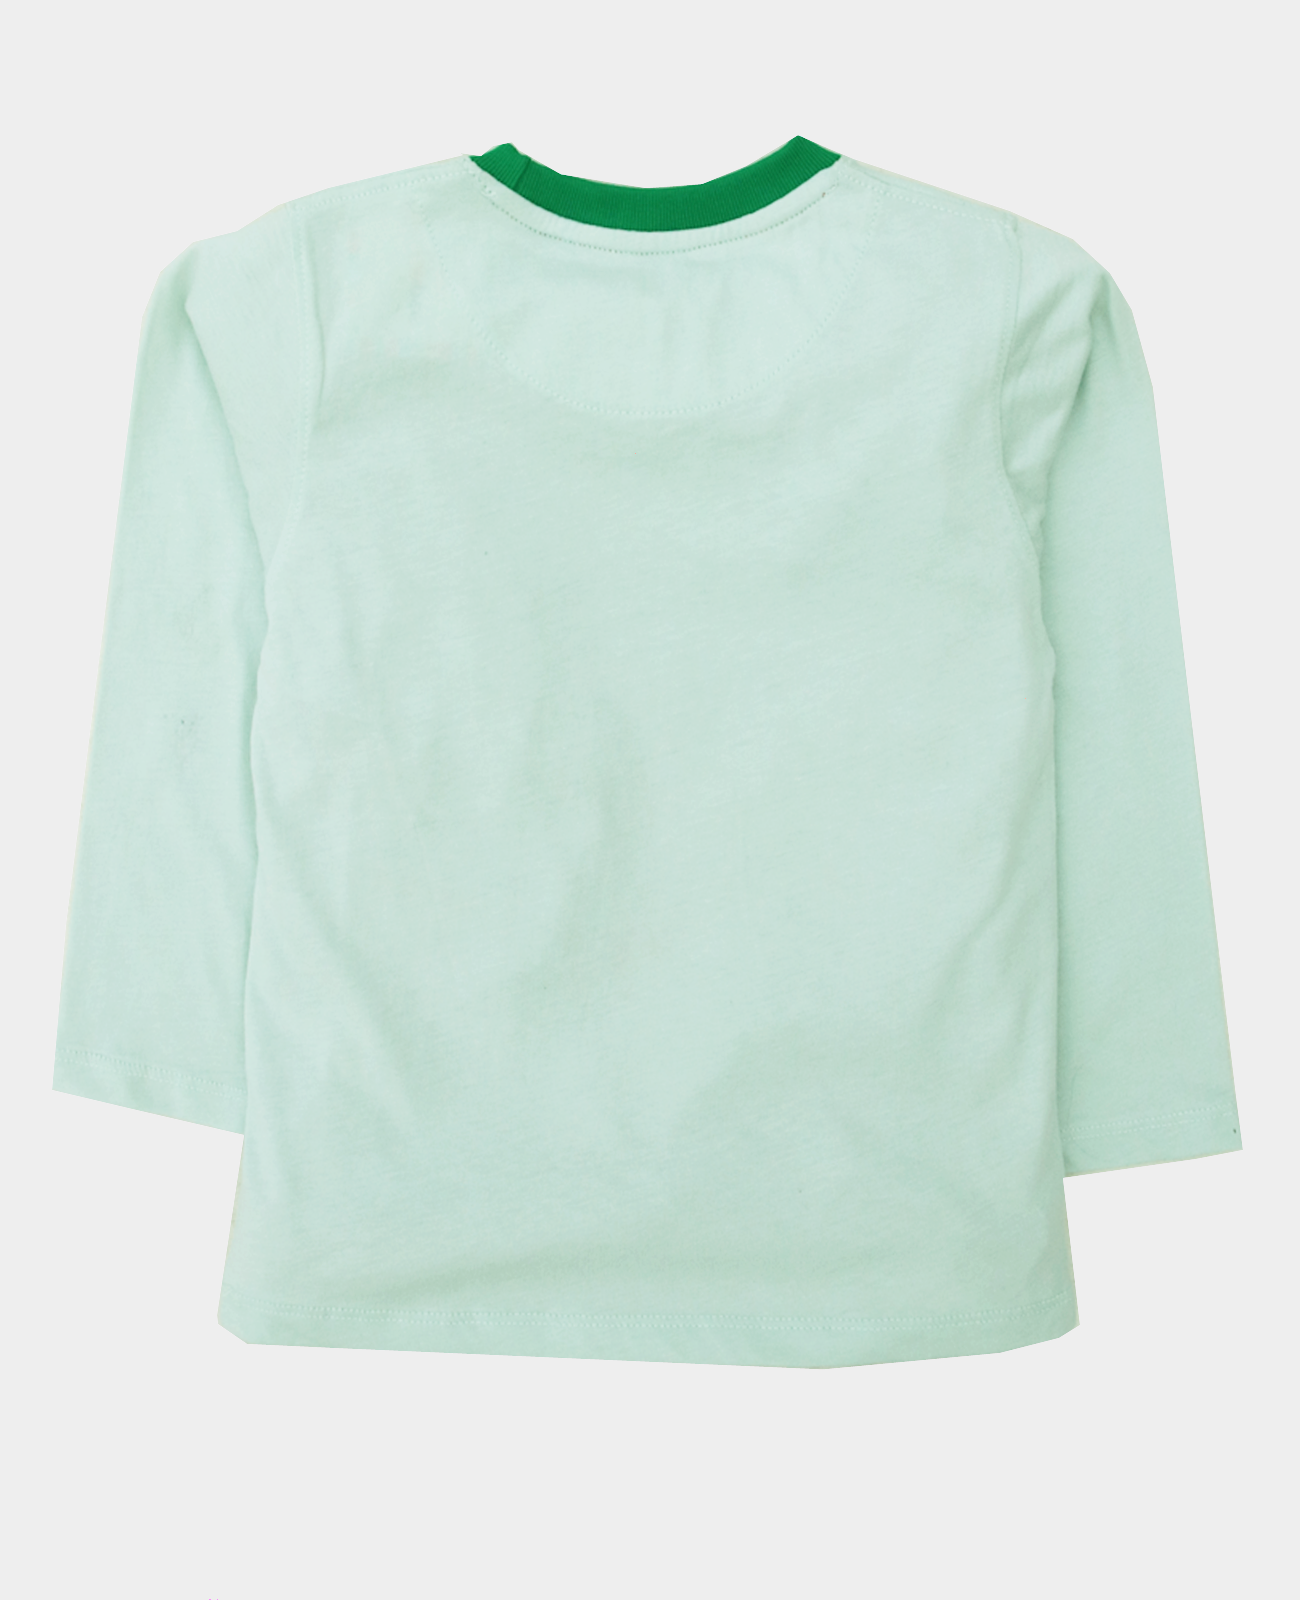 Green Long Sleeve Graphic T Shirt